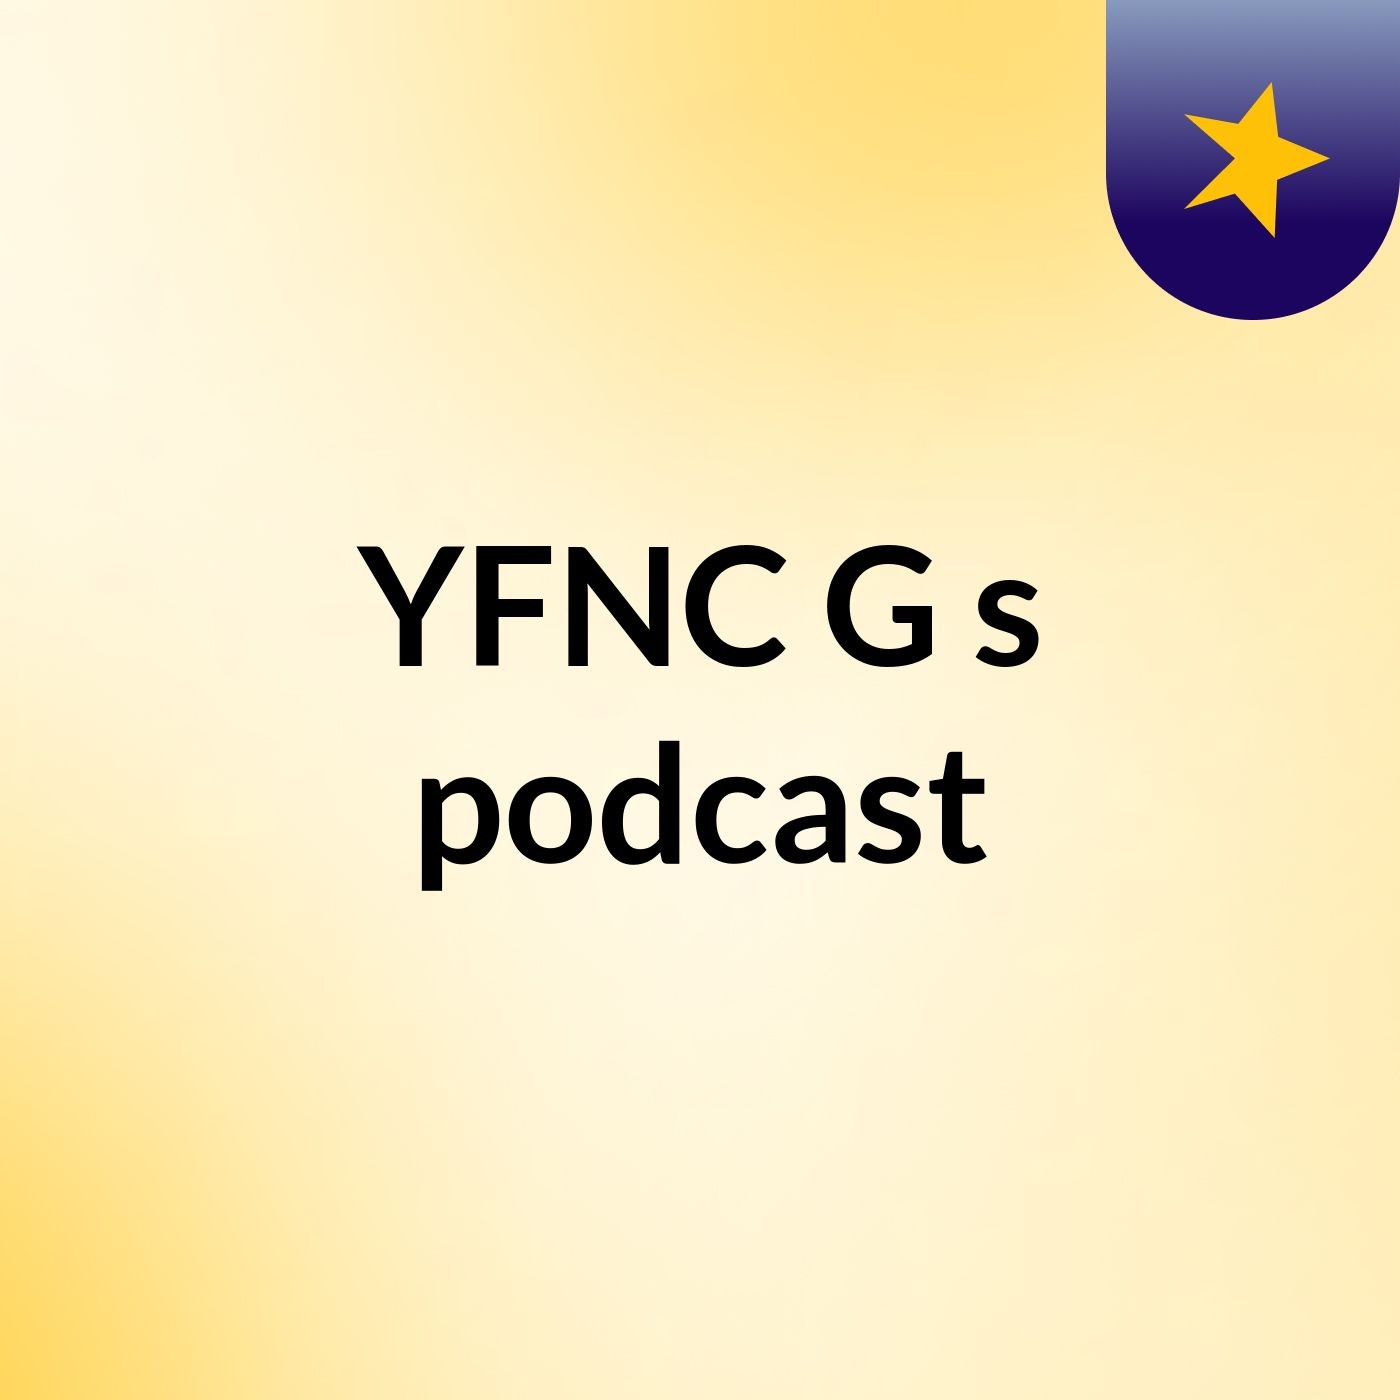 YFNC G's podcast